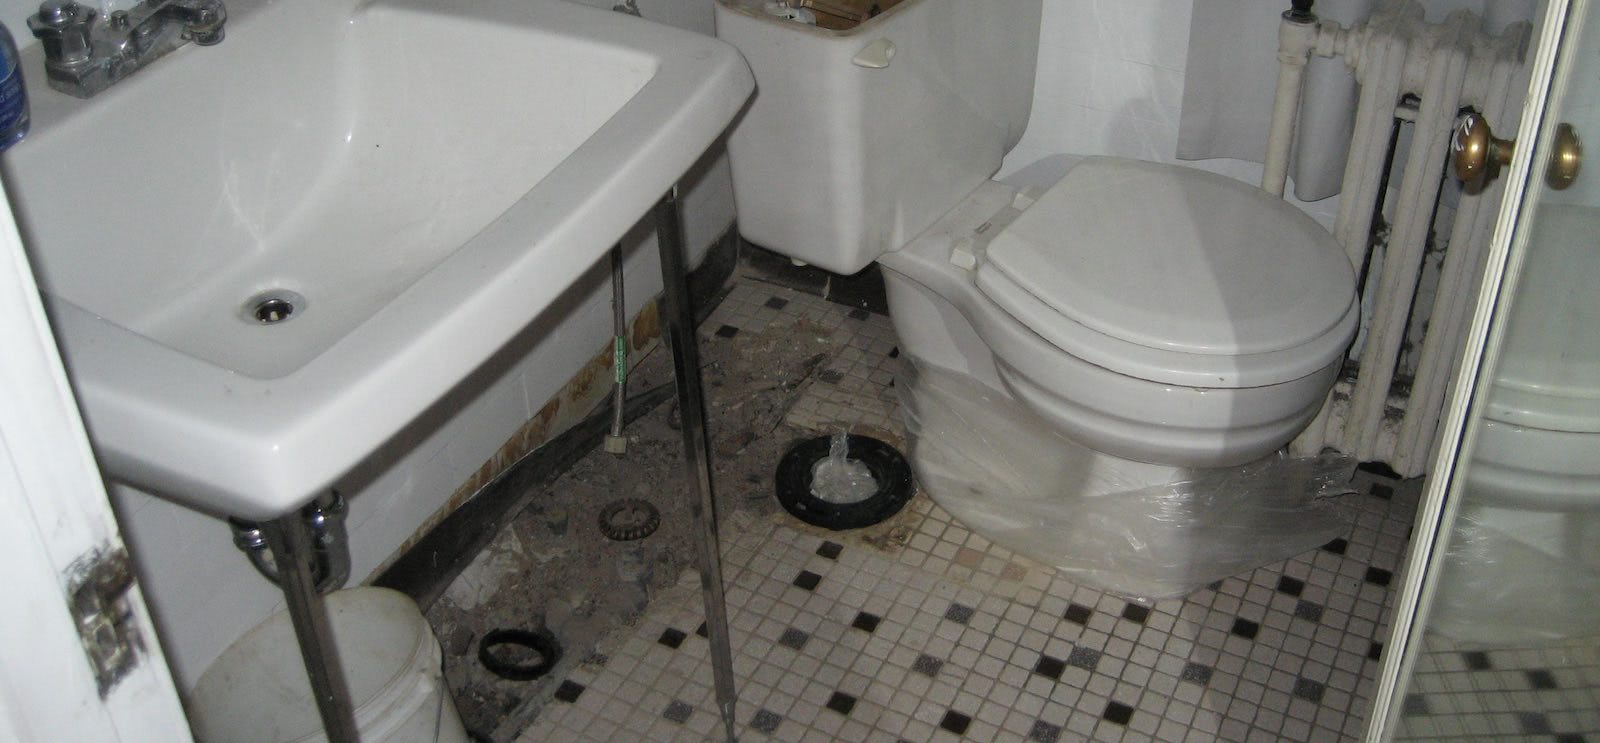 a gross toilet tho